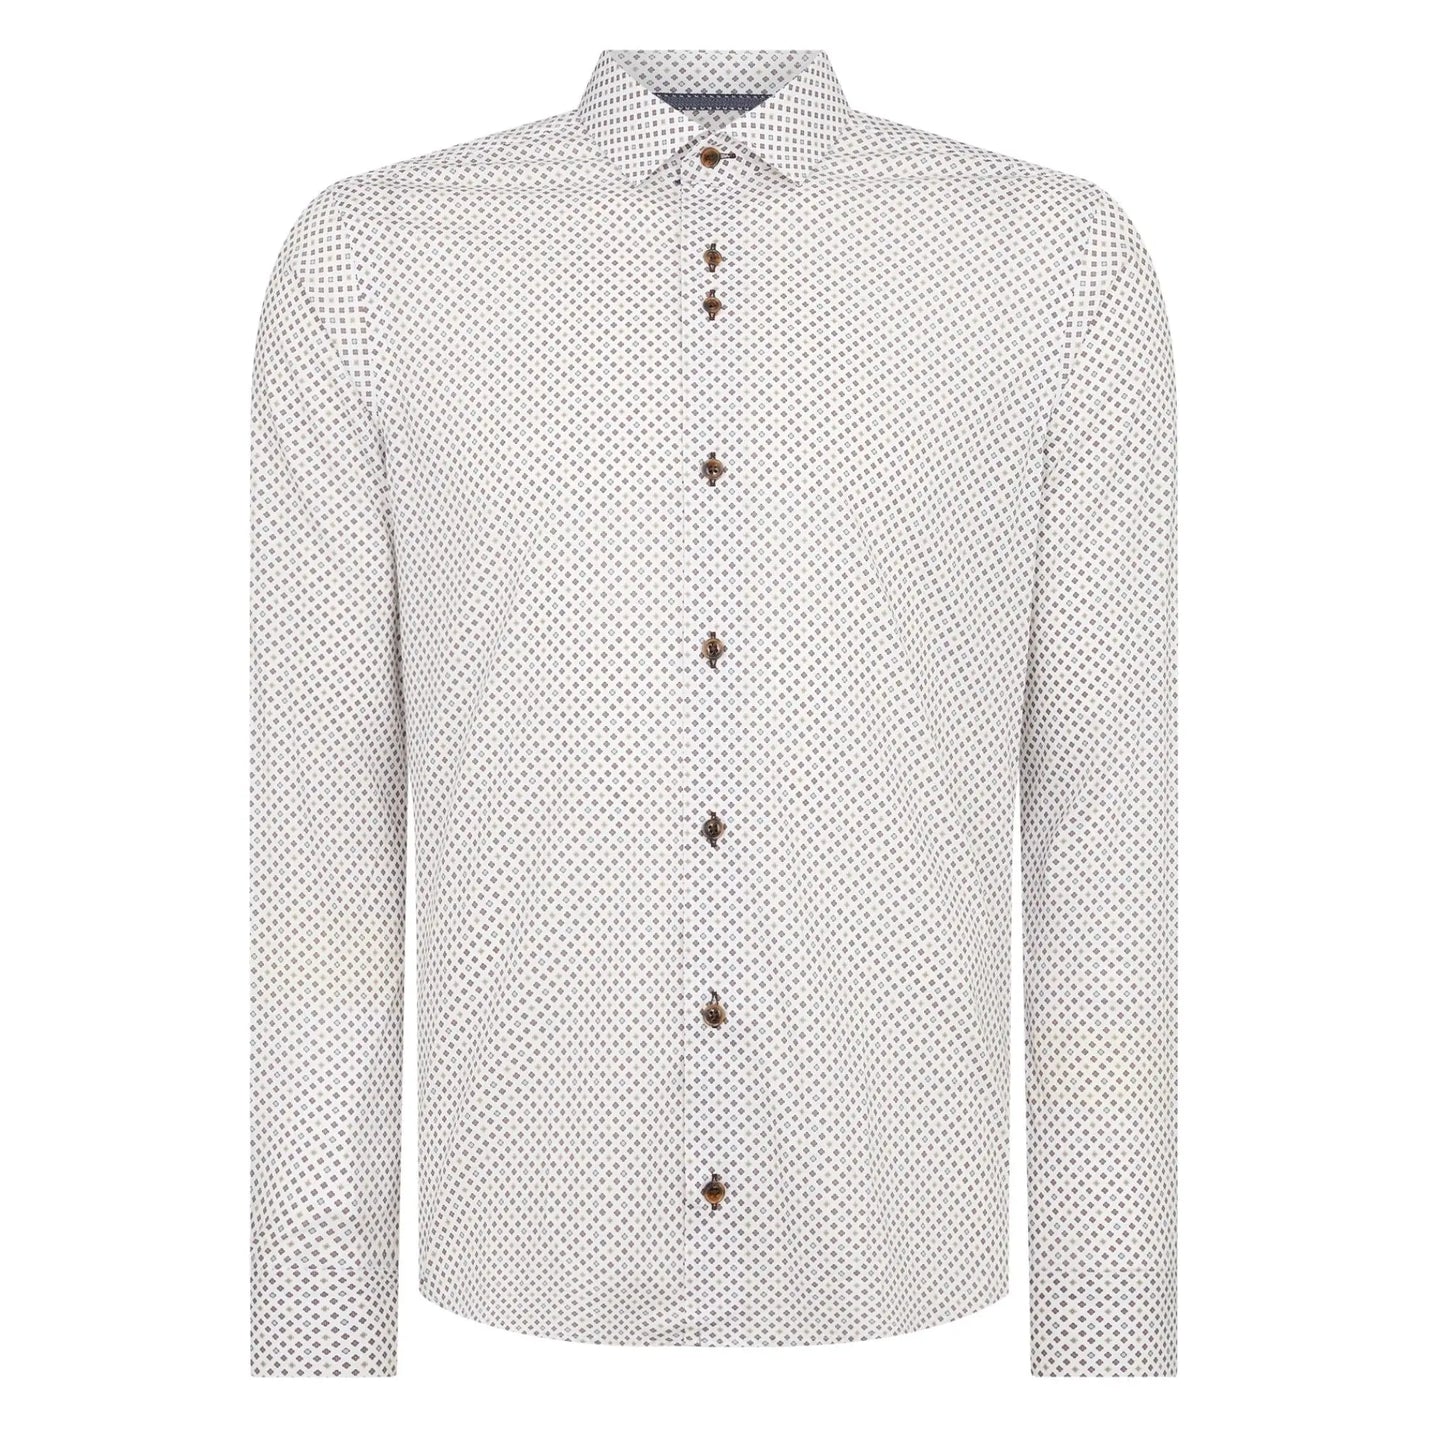 Buy Remus Uomo Kirk Stretch Fit Geo Print Shirt - White | Long-Sleeved Shirtss at Woven Durham